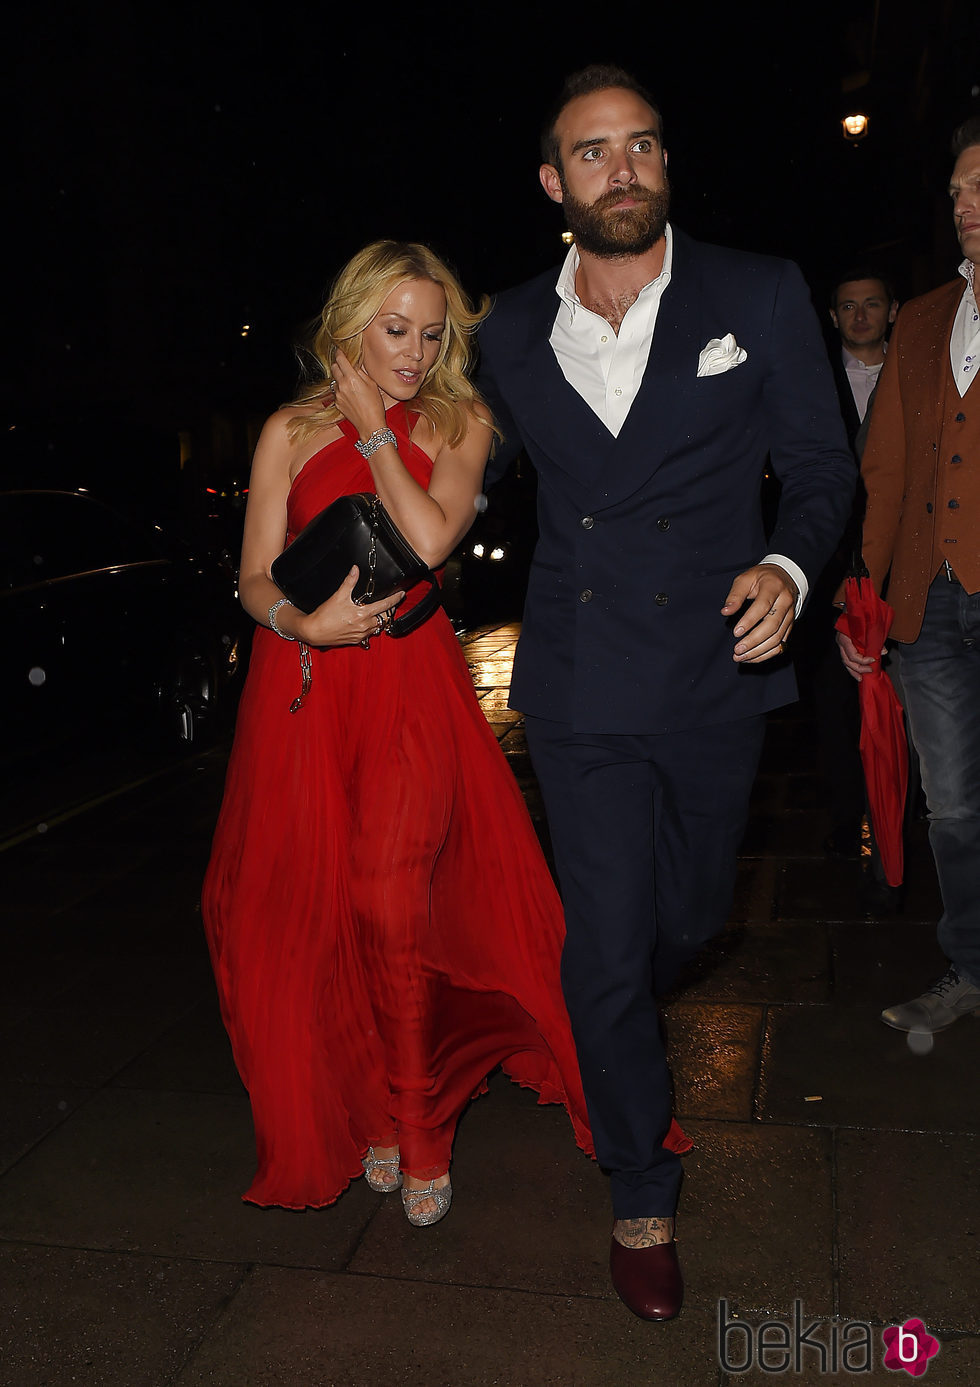 Kylie Minogue y Joshua Sasse en la Premiere de 'Absolutely Fabulous'